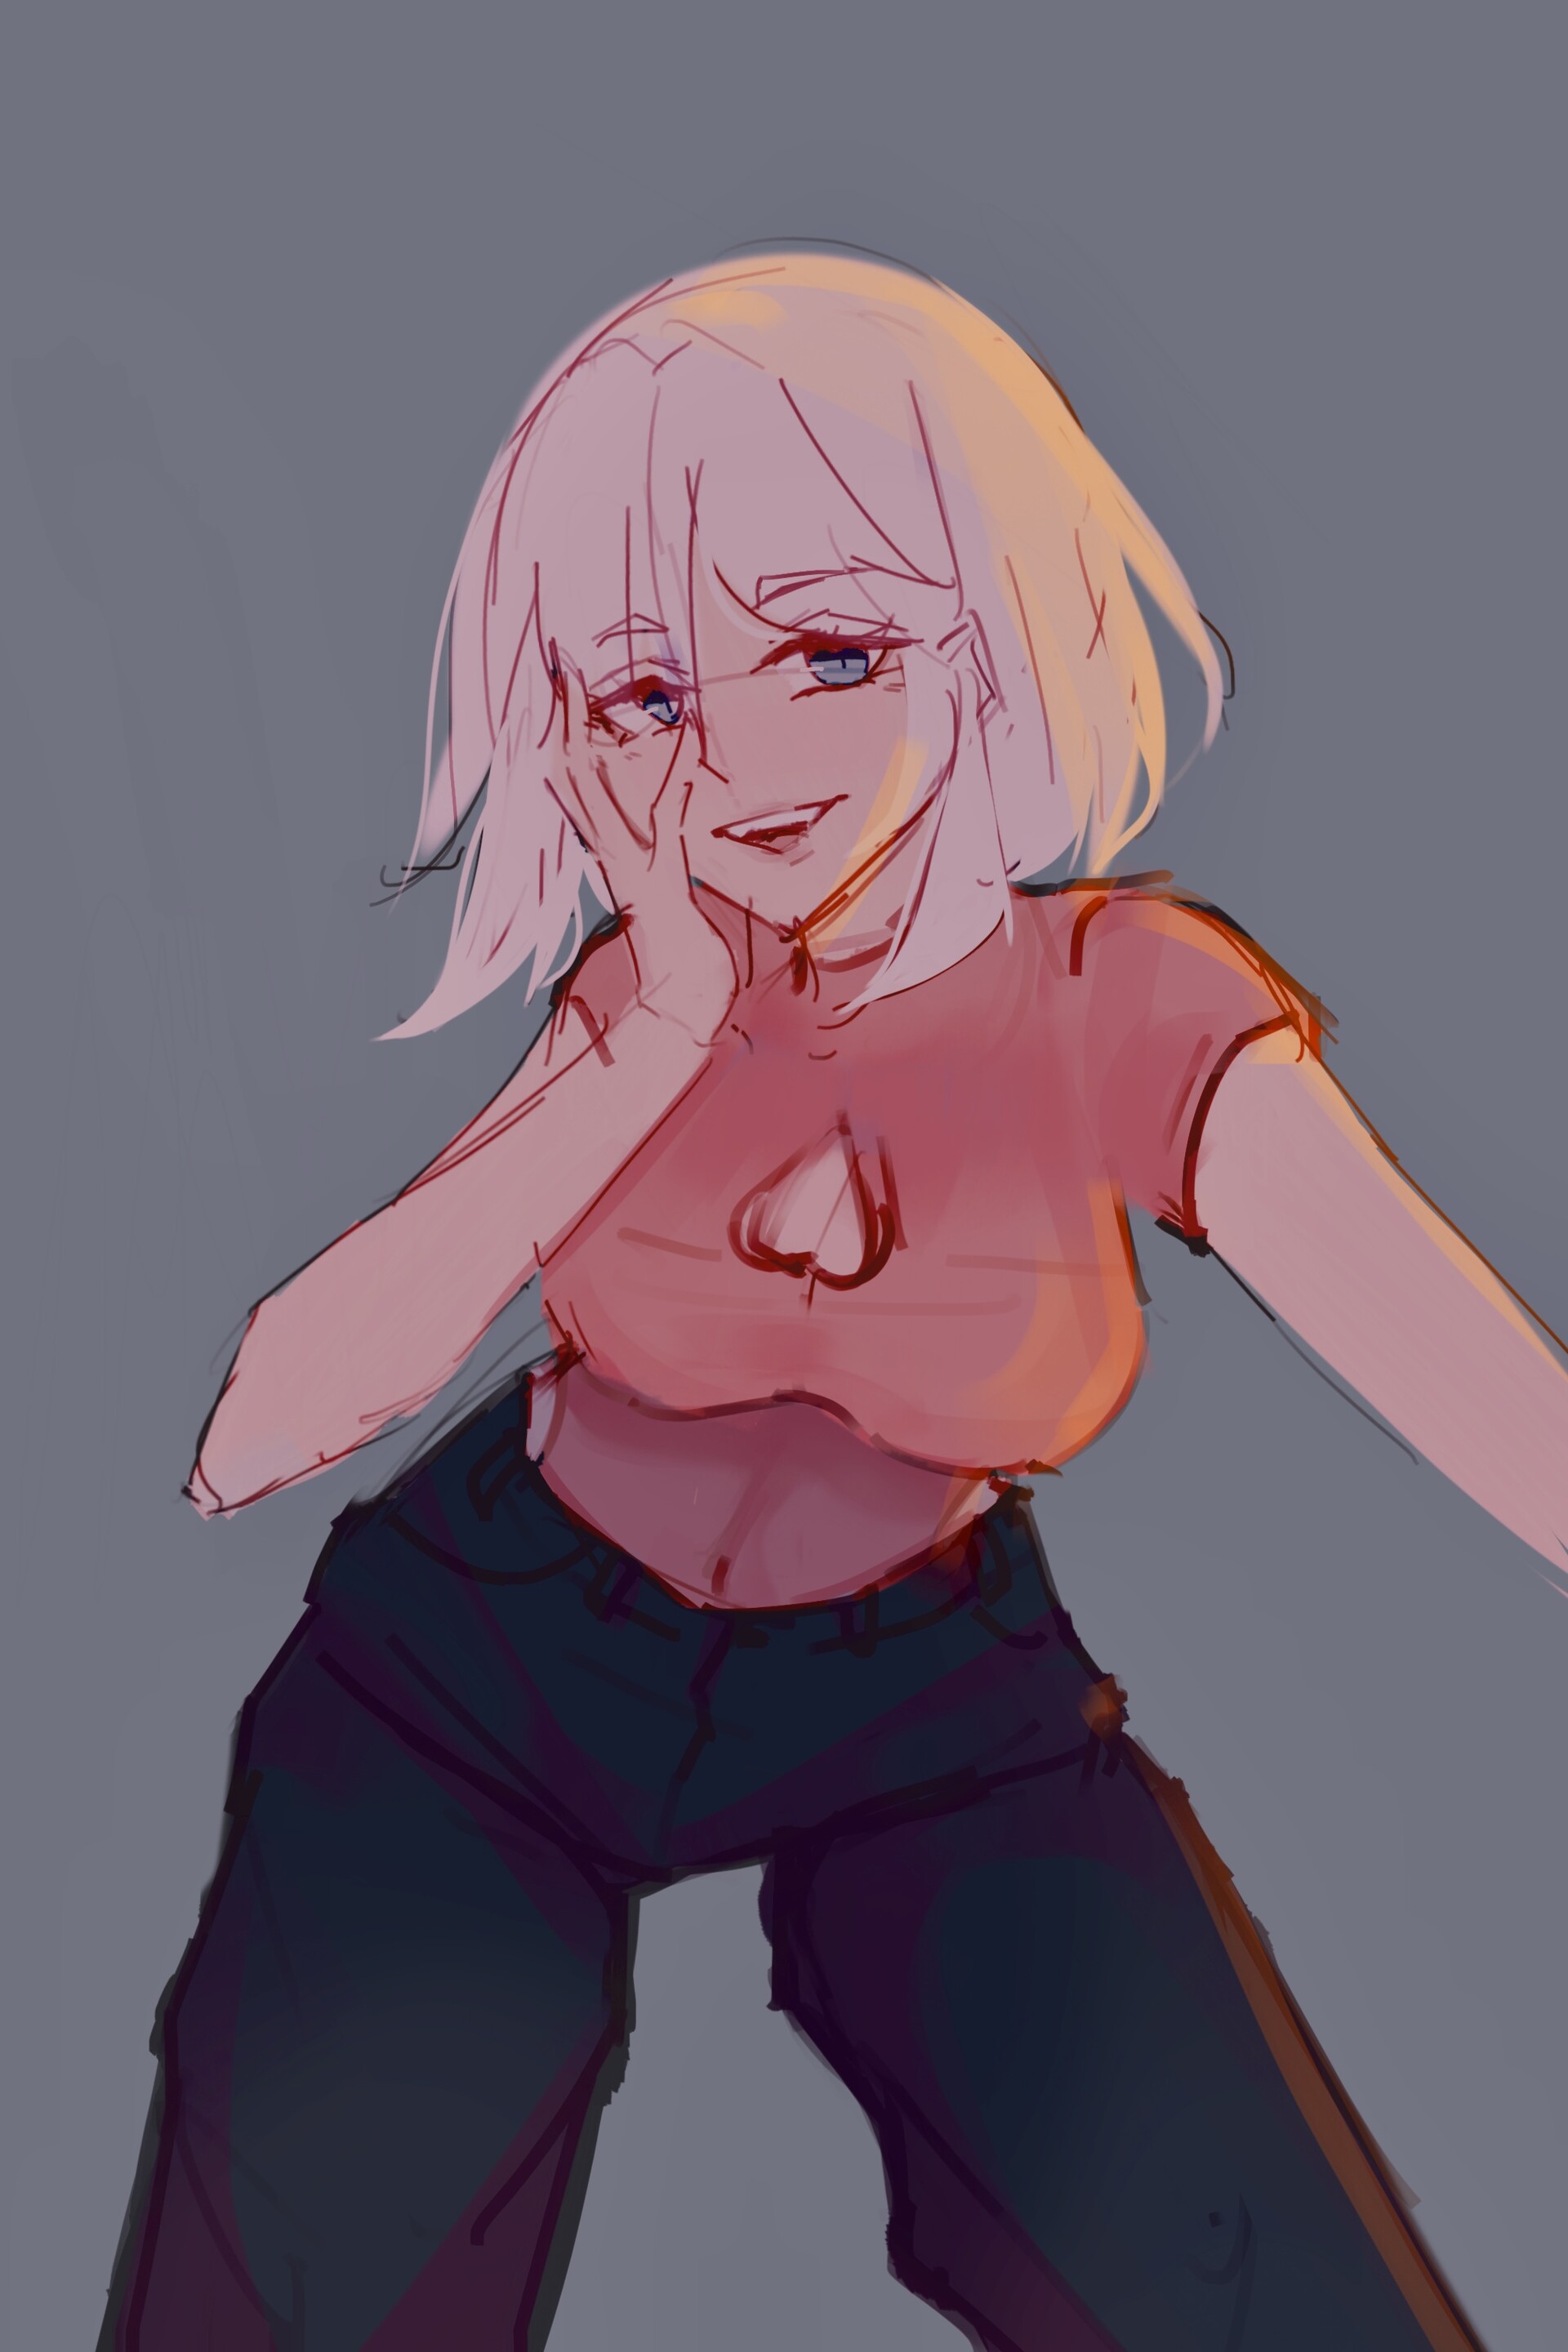 ArtStation - Sketch. Anime girl with white hair